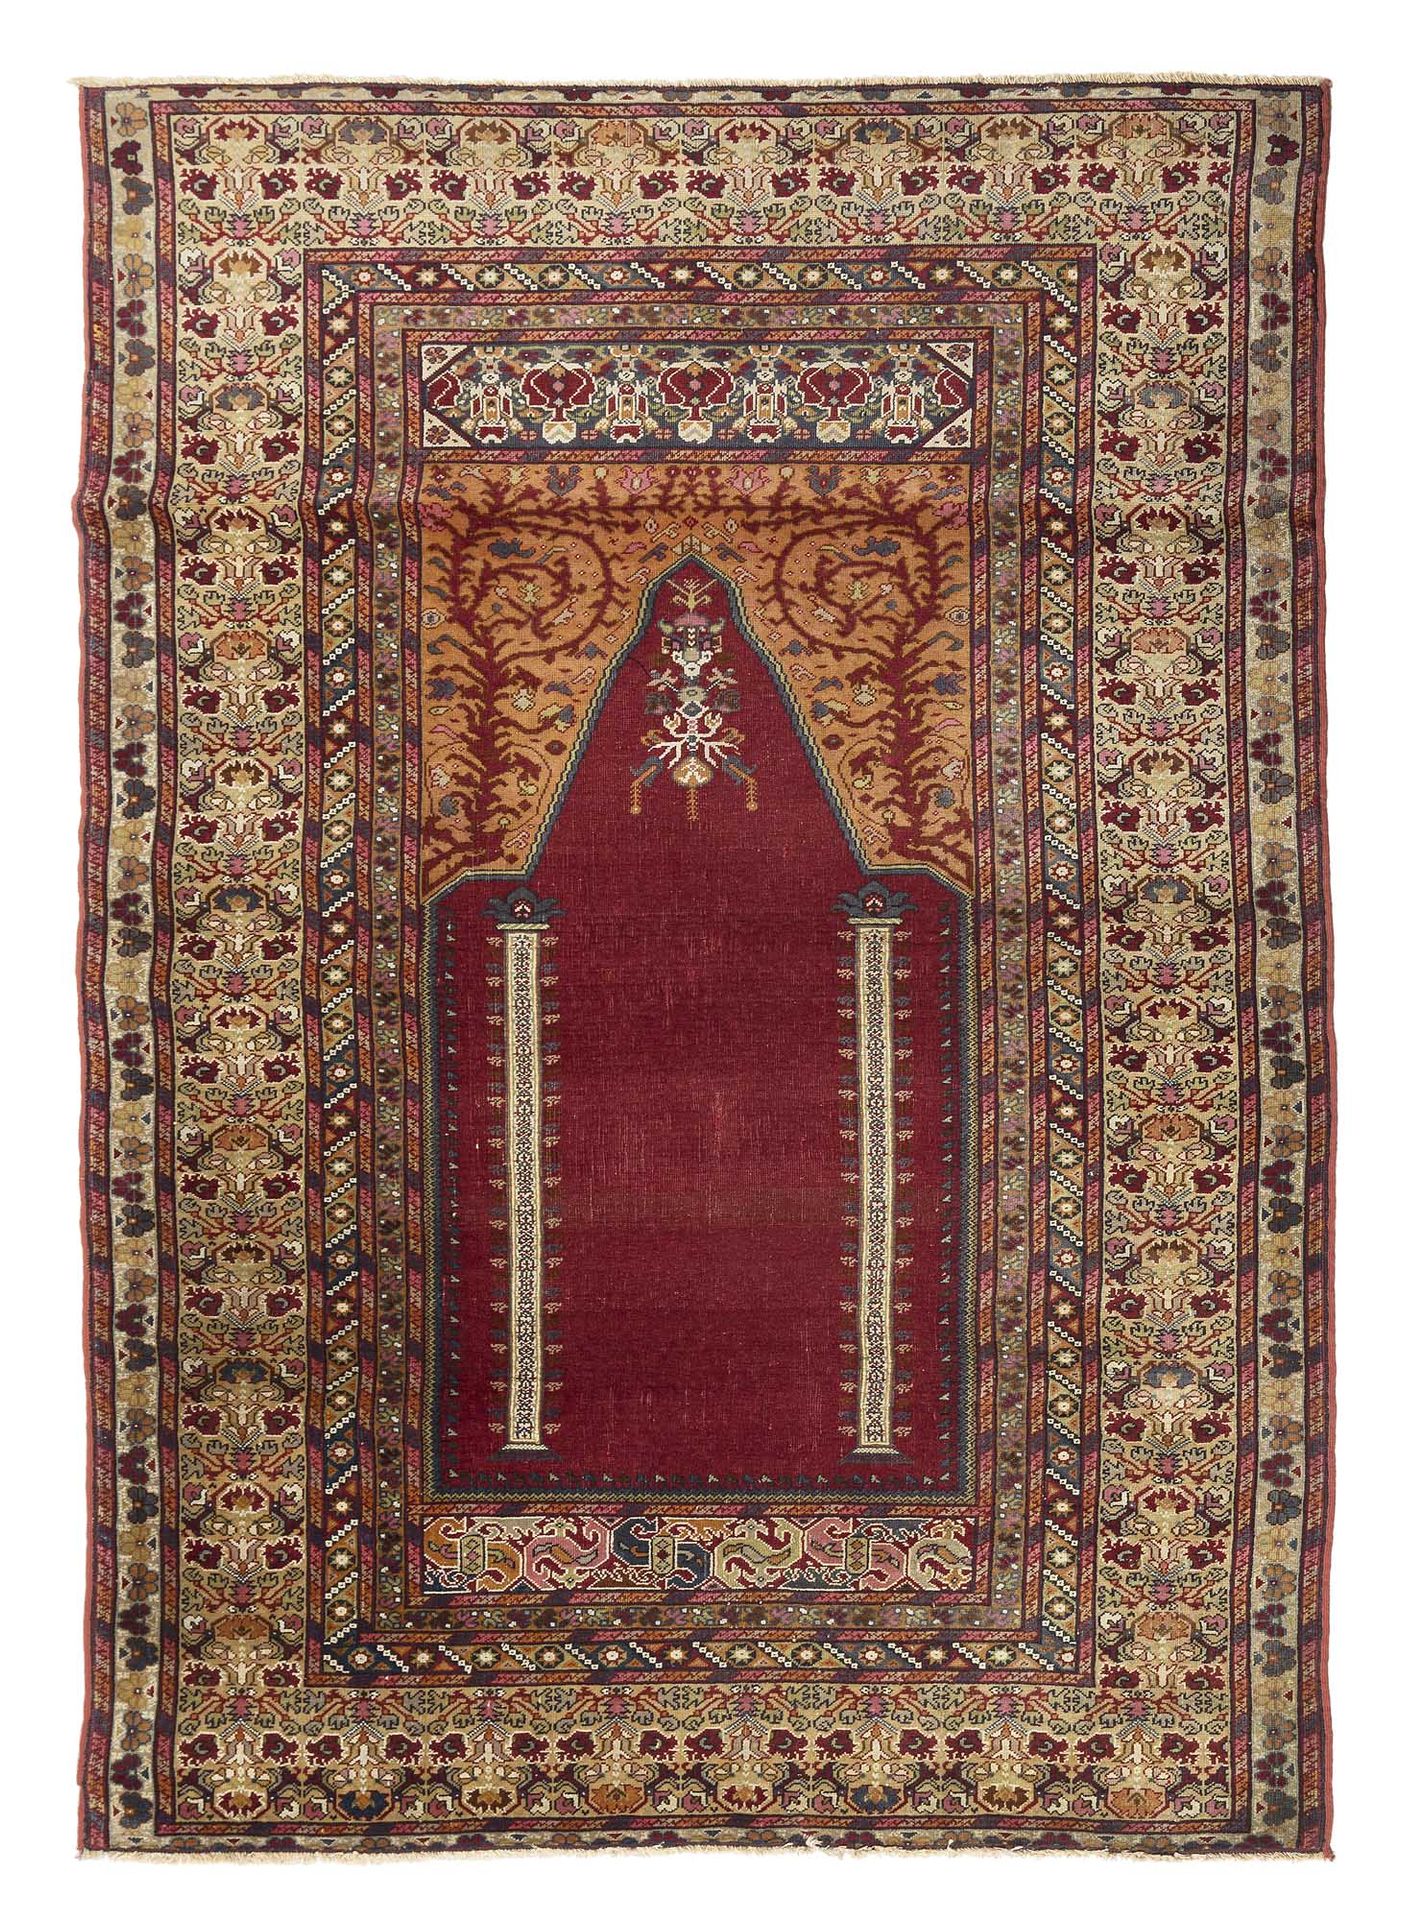 Null Teppich PANDERMA (Kleinasien), Ende des 19. Jahrhunderts.

Jahrhundert. Maß&hellip;